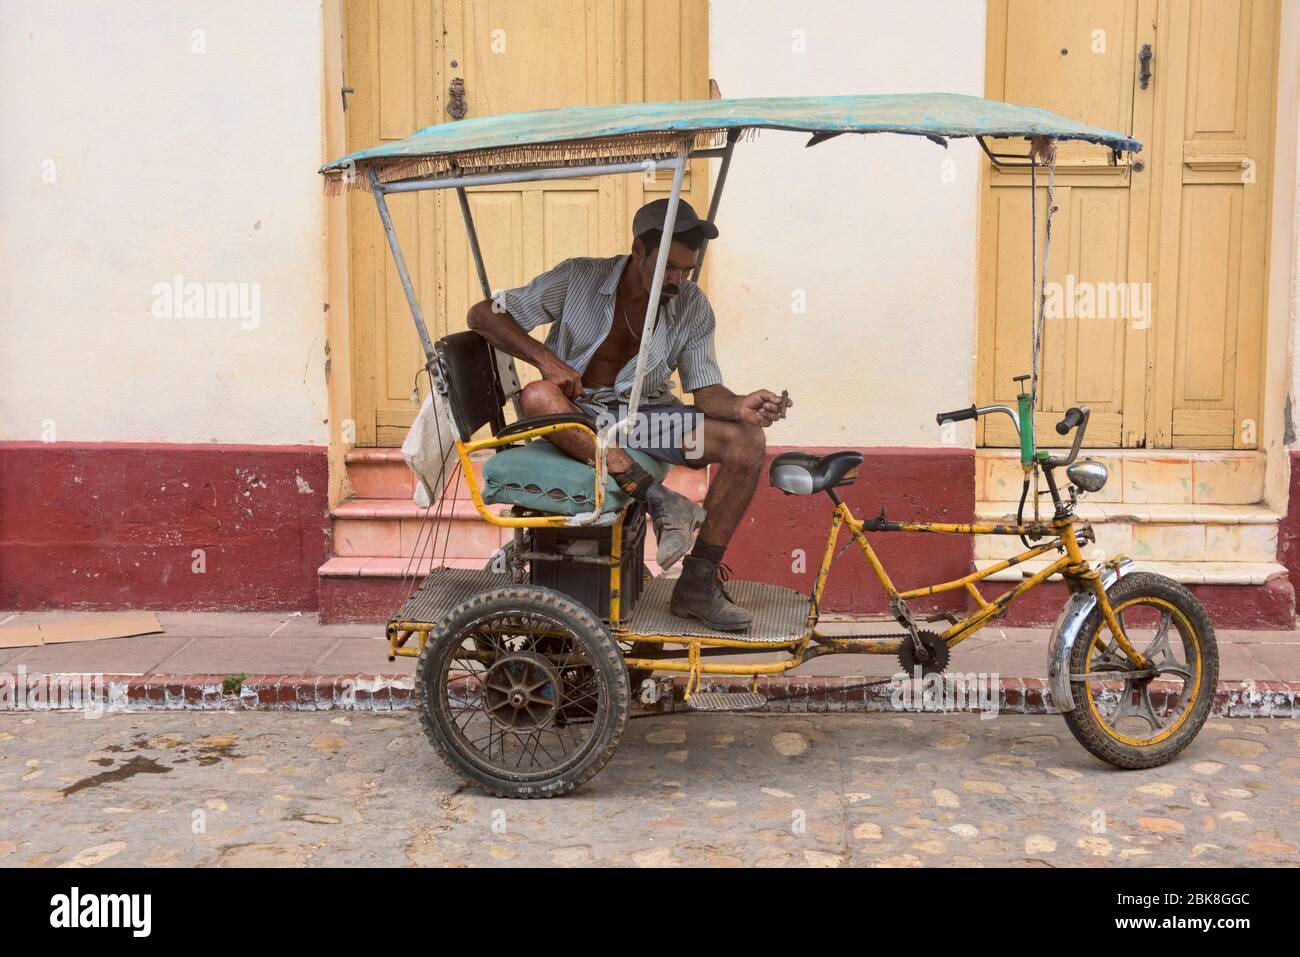 Bici taxi waiting in UNESCO World Heritage Trinidad, Cuba Stock Photo